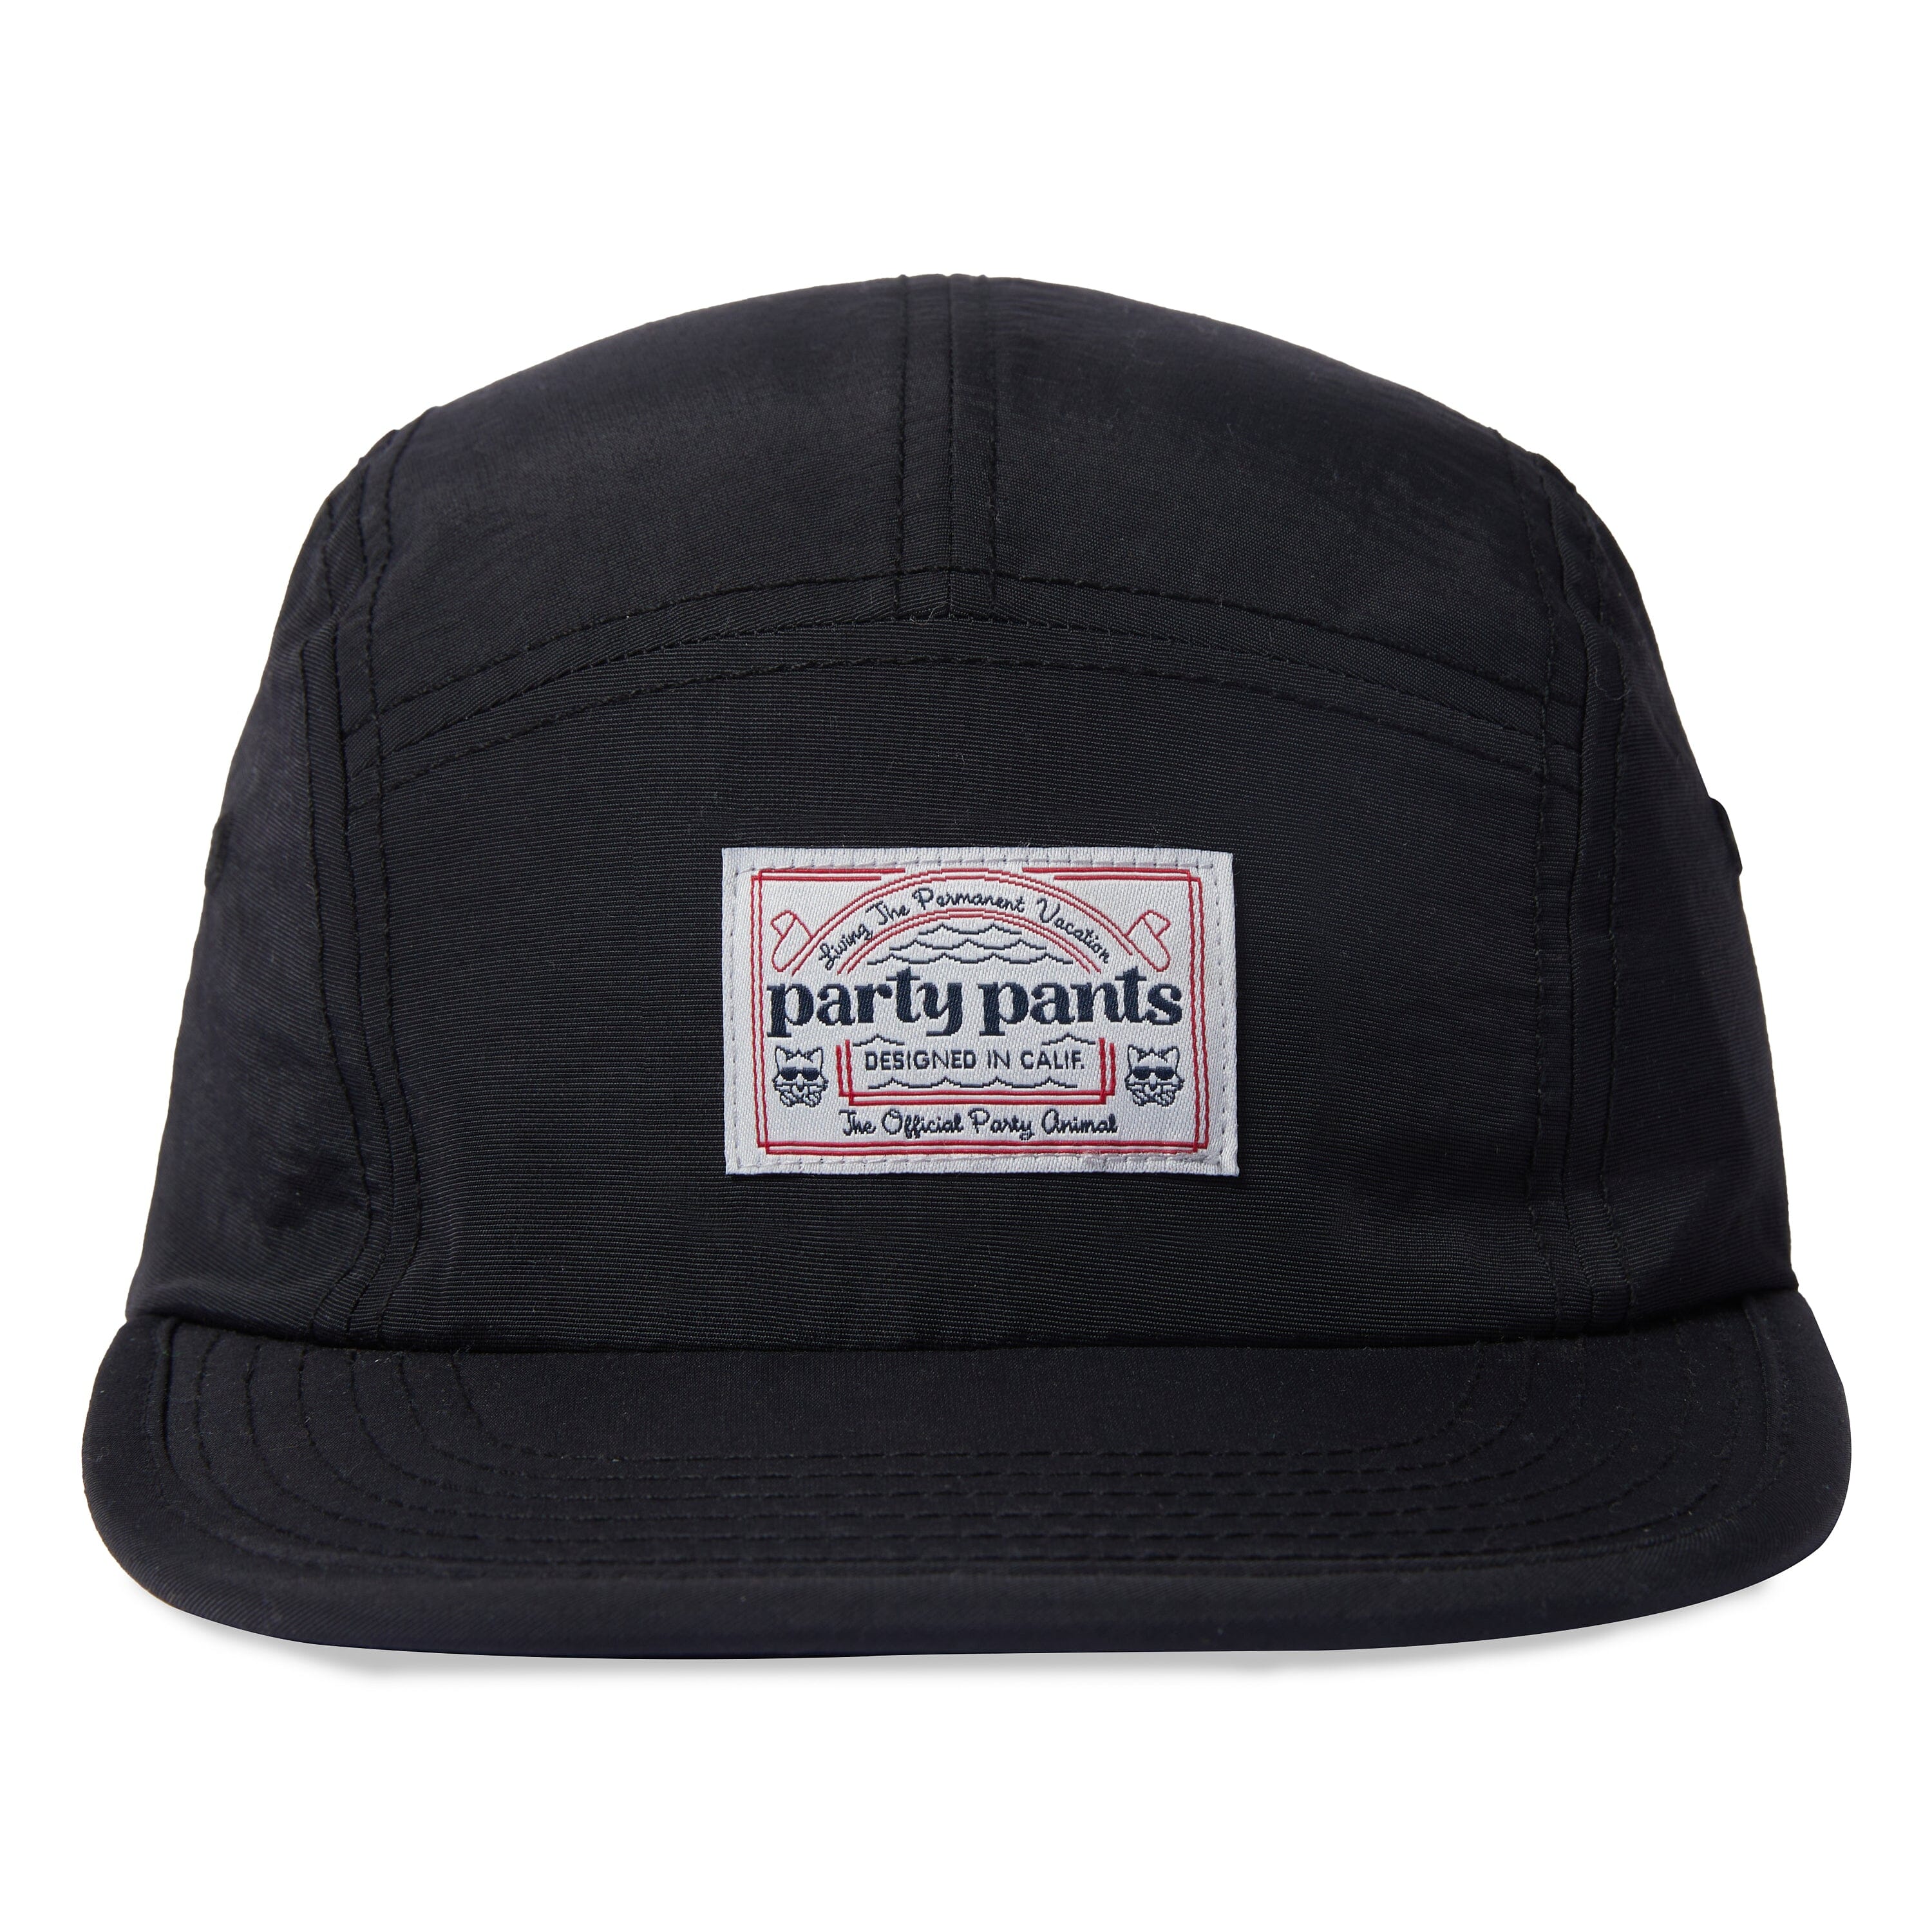 RETRIEVER TWILL 6-PANEL HAT - BLACK HATS PARTY PANTS 